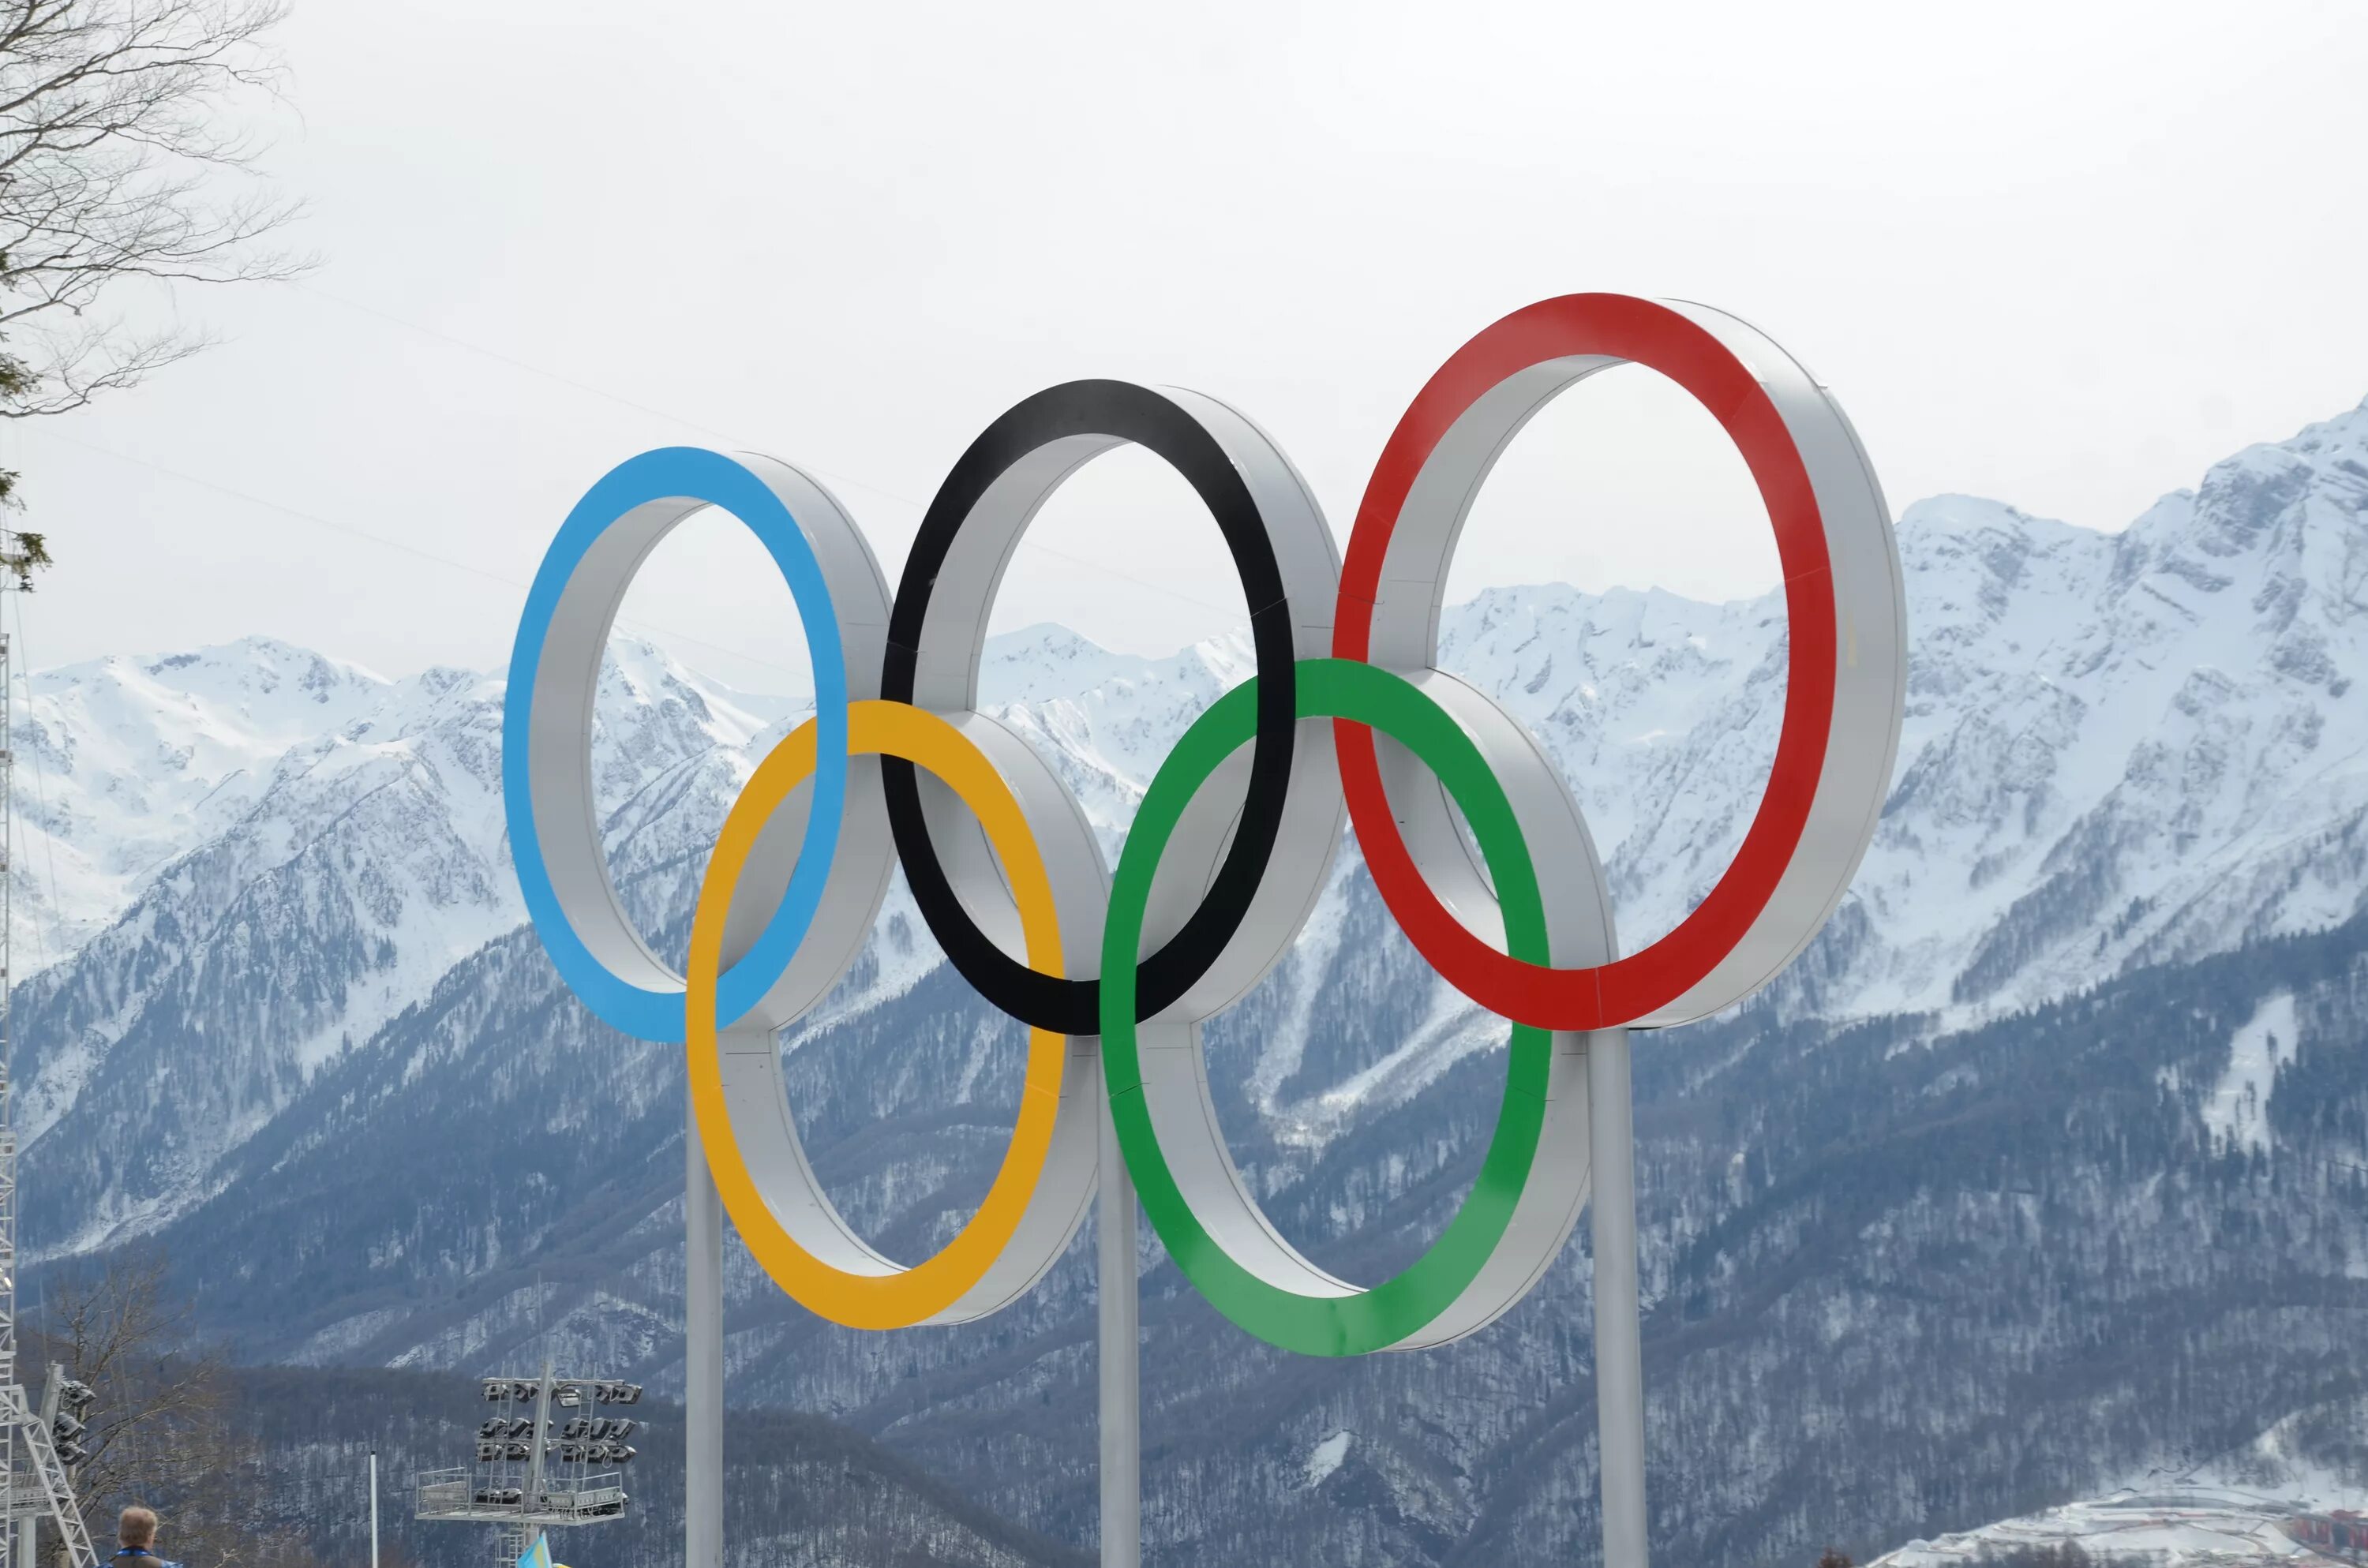 Олимпийские кольца в Сочи. Олимпийские игры в Сочи 2014 кольца. Олимп кольца в Сочи. Олимпийские кольца Сочи Олимпийский парк. Кольца олимпиады сочи 2014